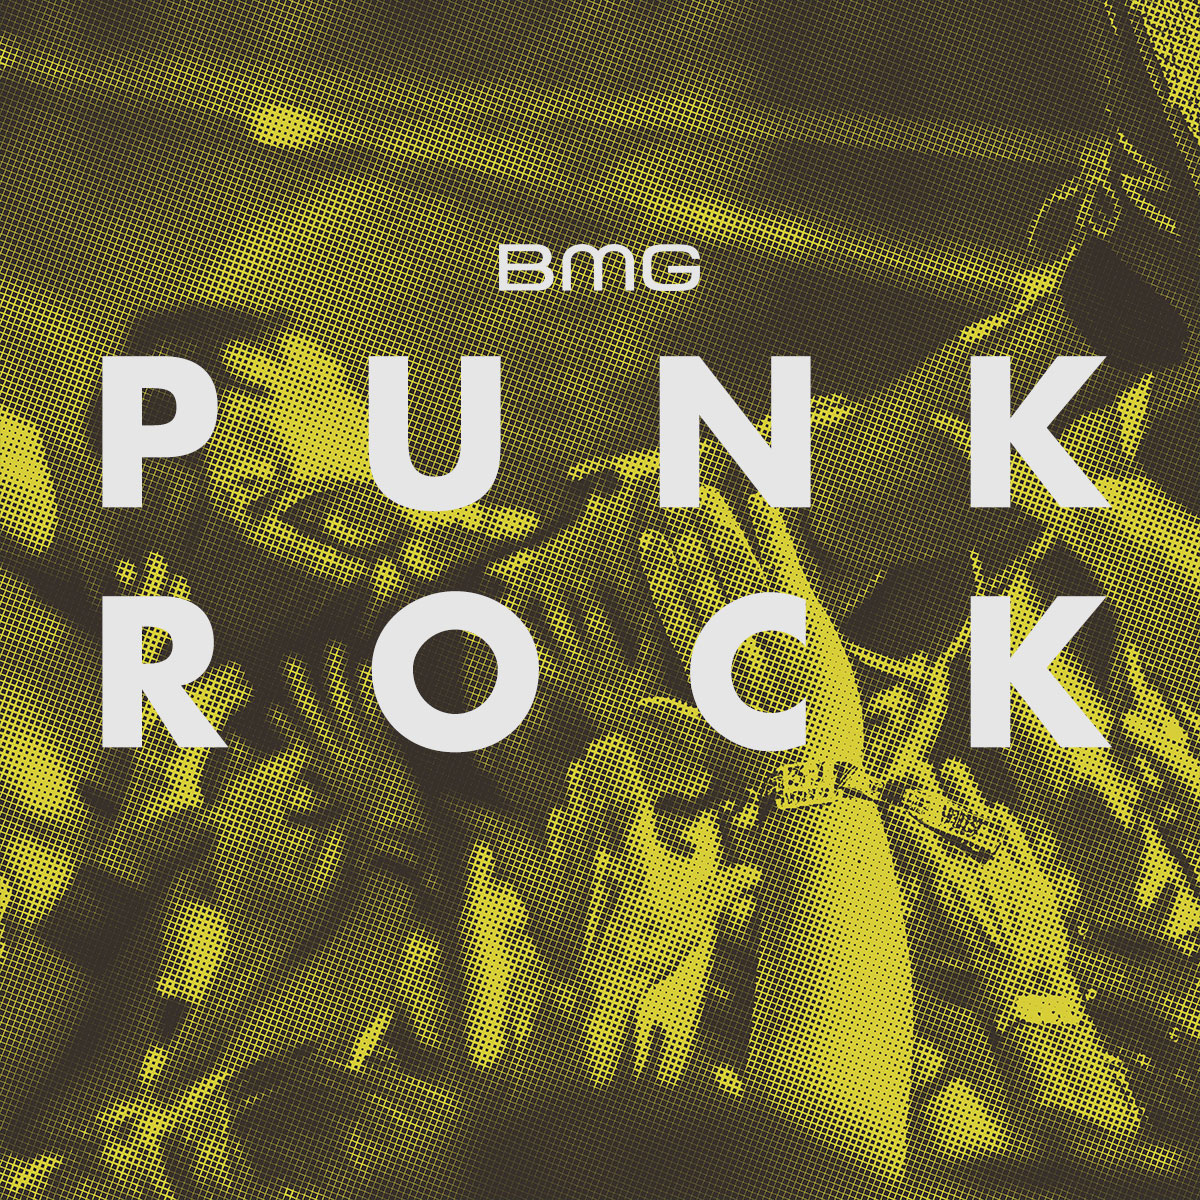 Punk-Rock.jpg